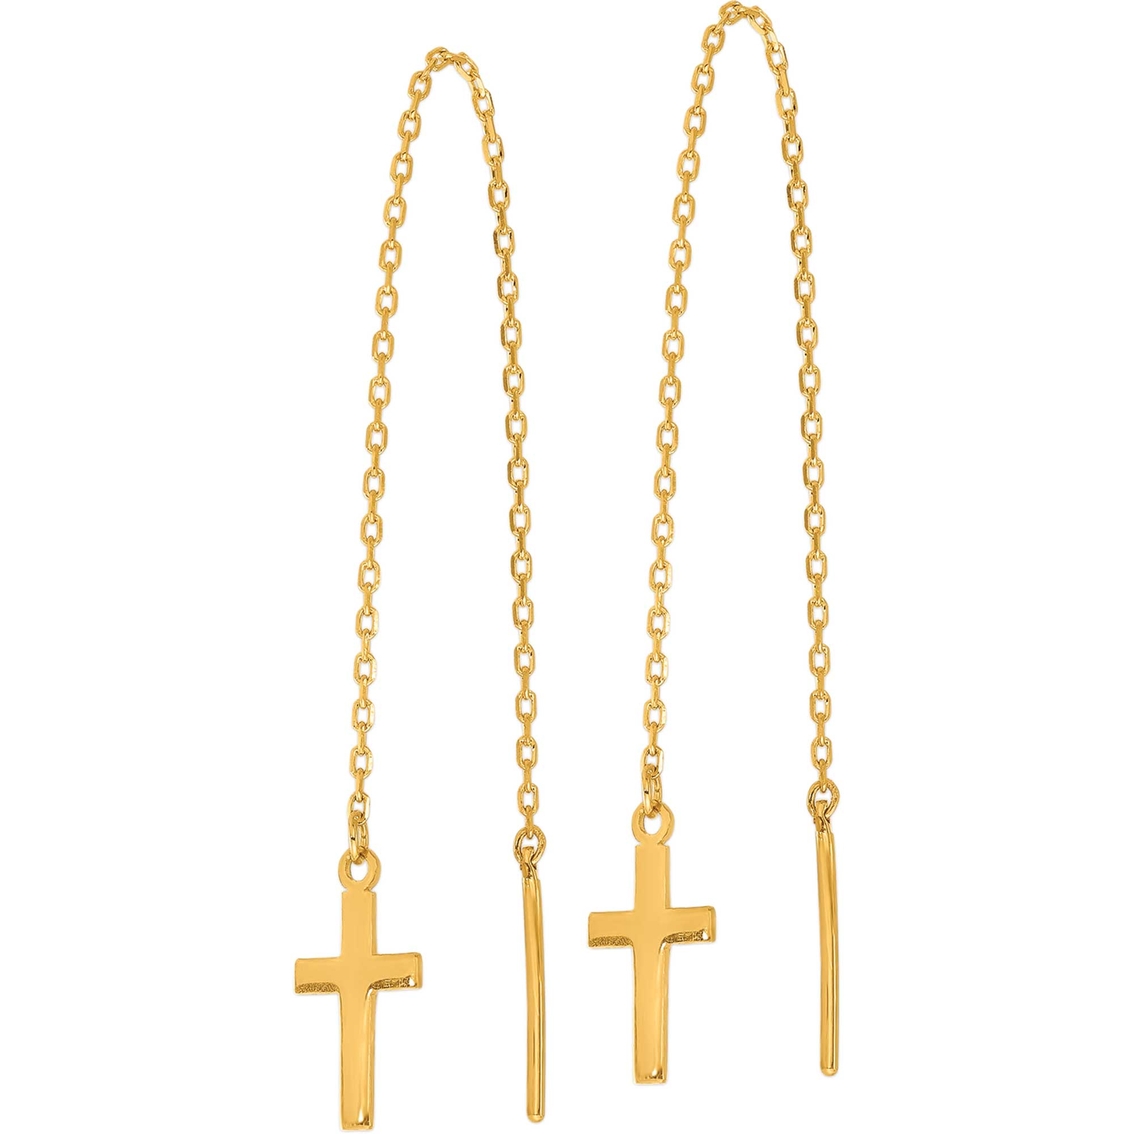 24K Pure Gold Fashion Cross Drop Earrings - Image 2 of 3